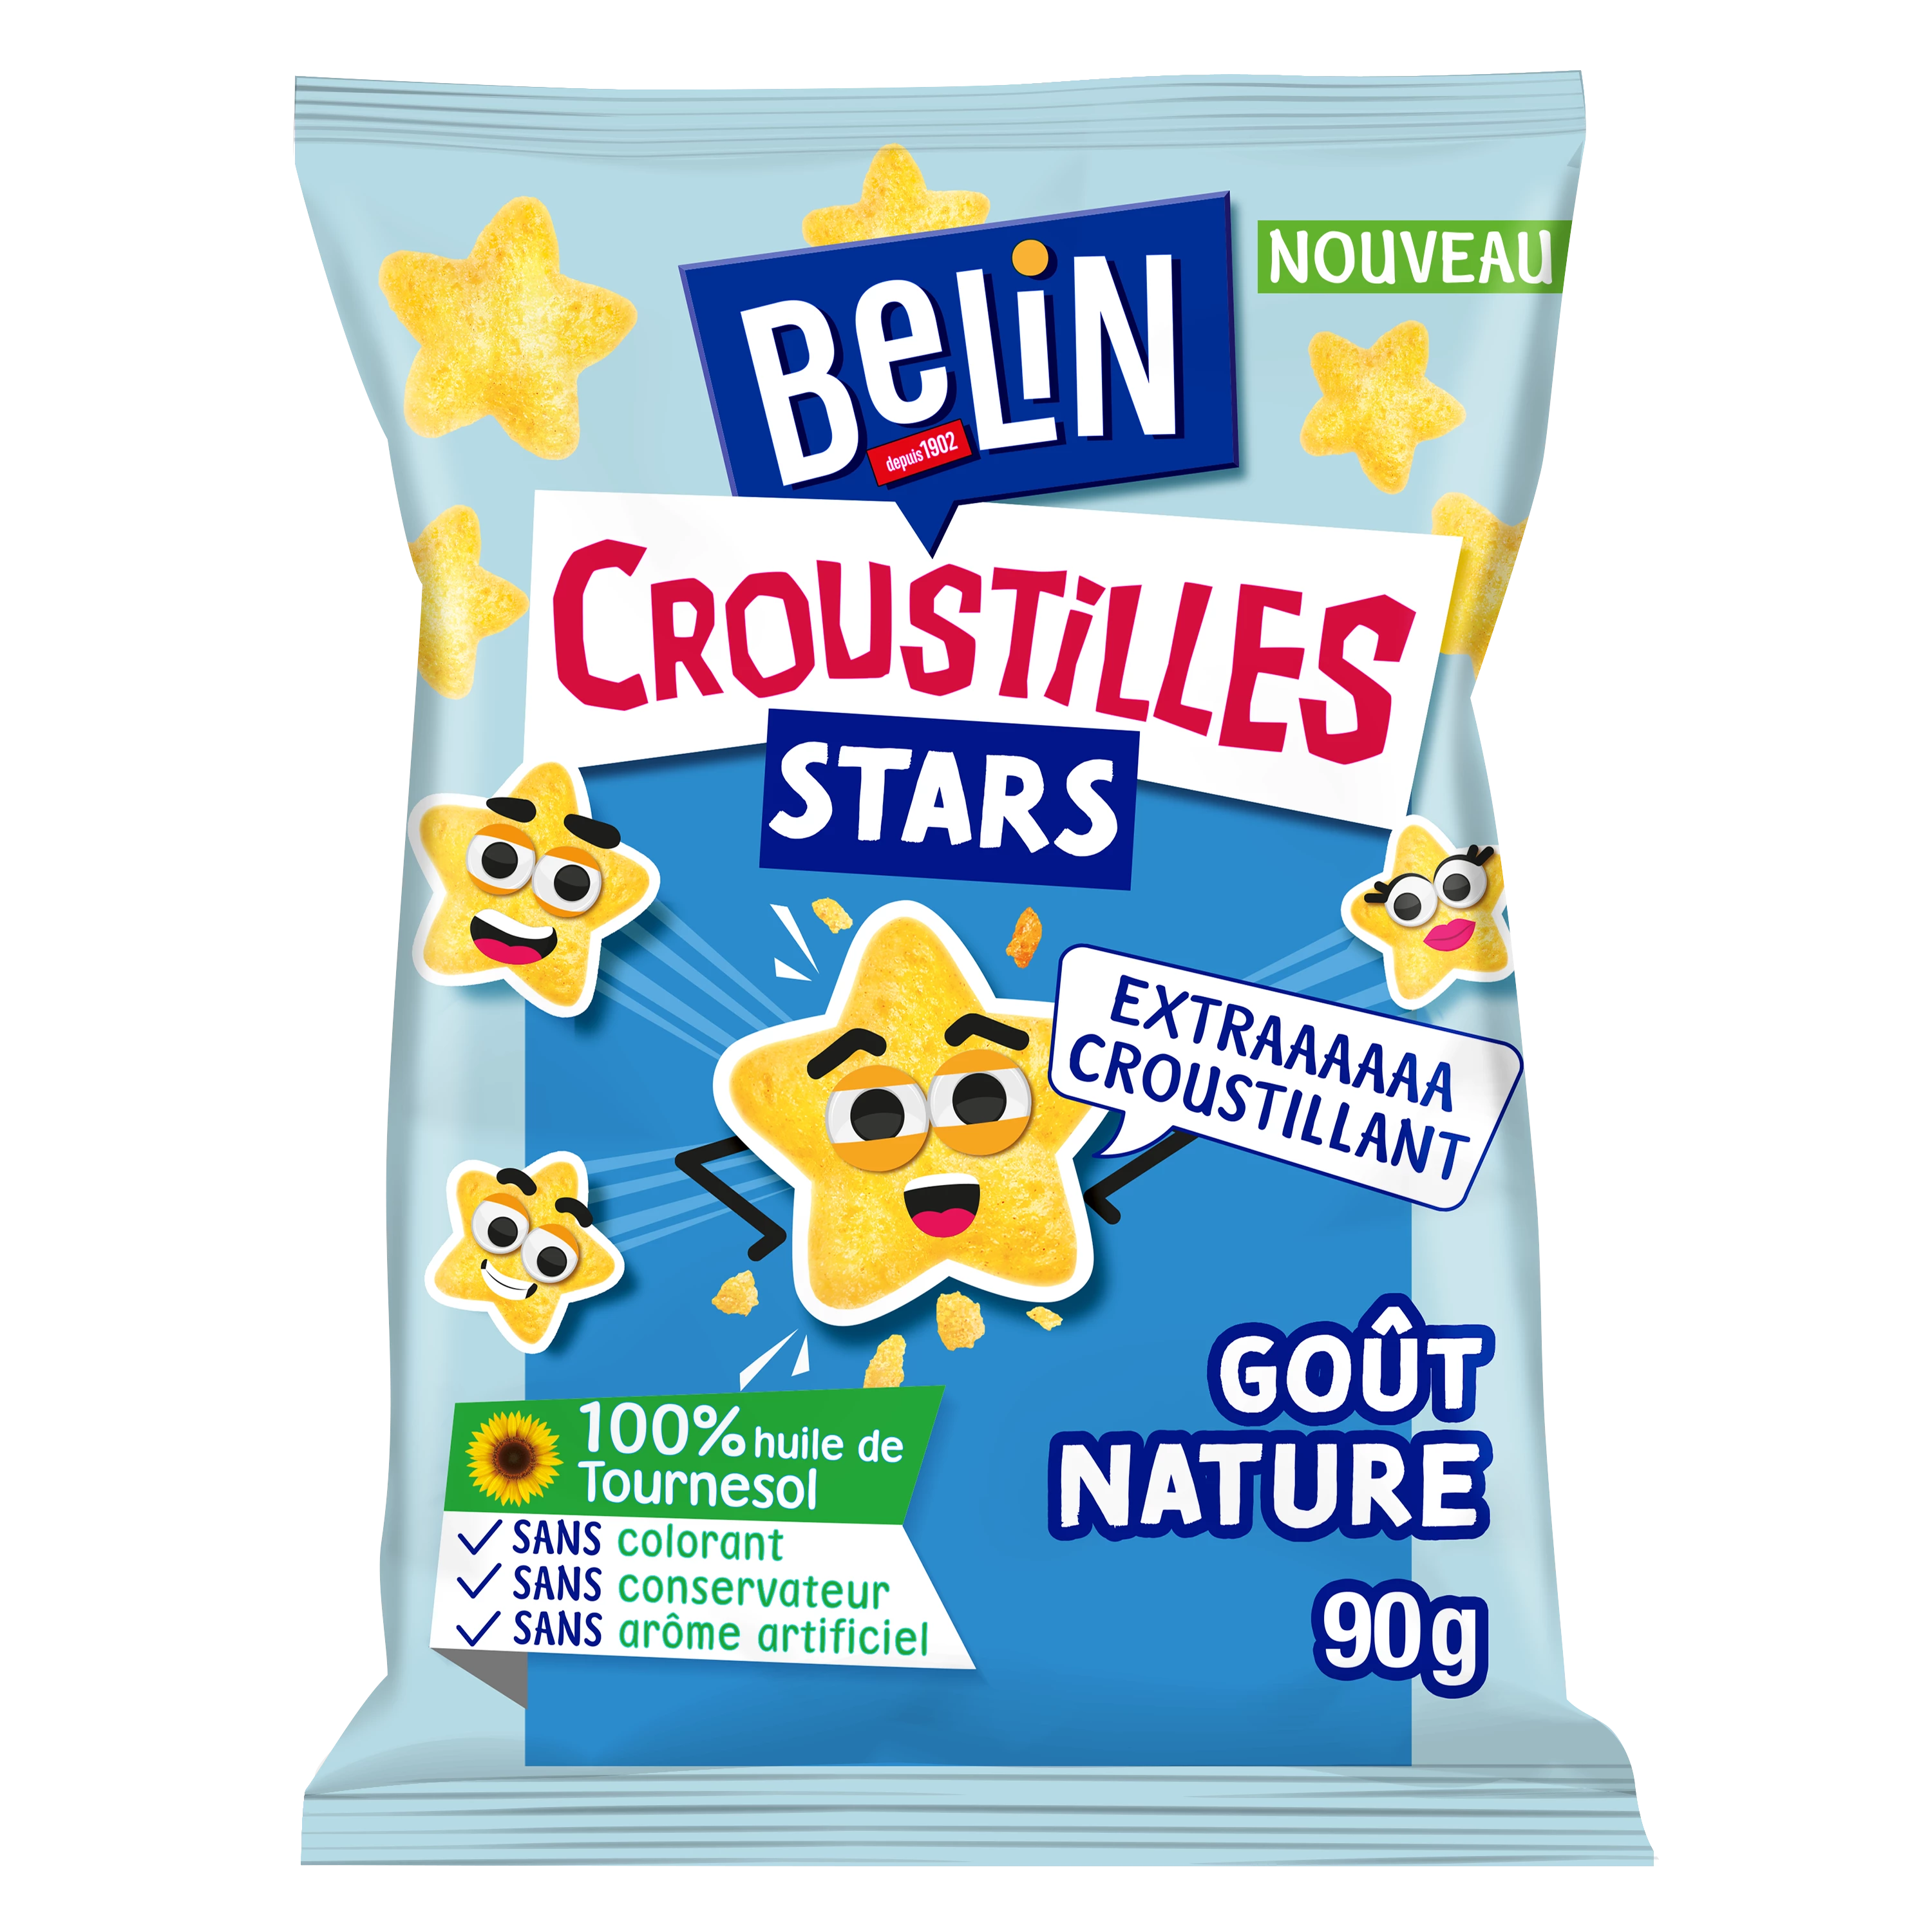 Biscuits Apéritifs Goût Nature Croustil les Stars, 90g - BELIN